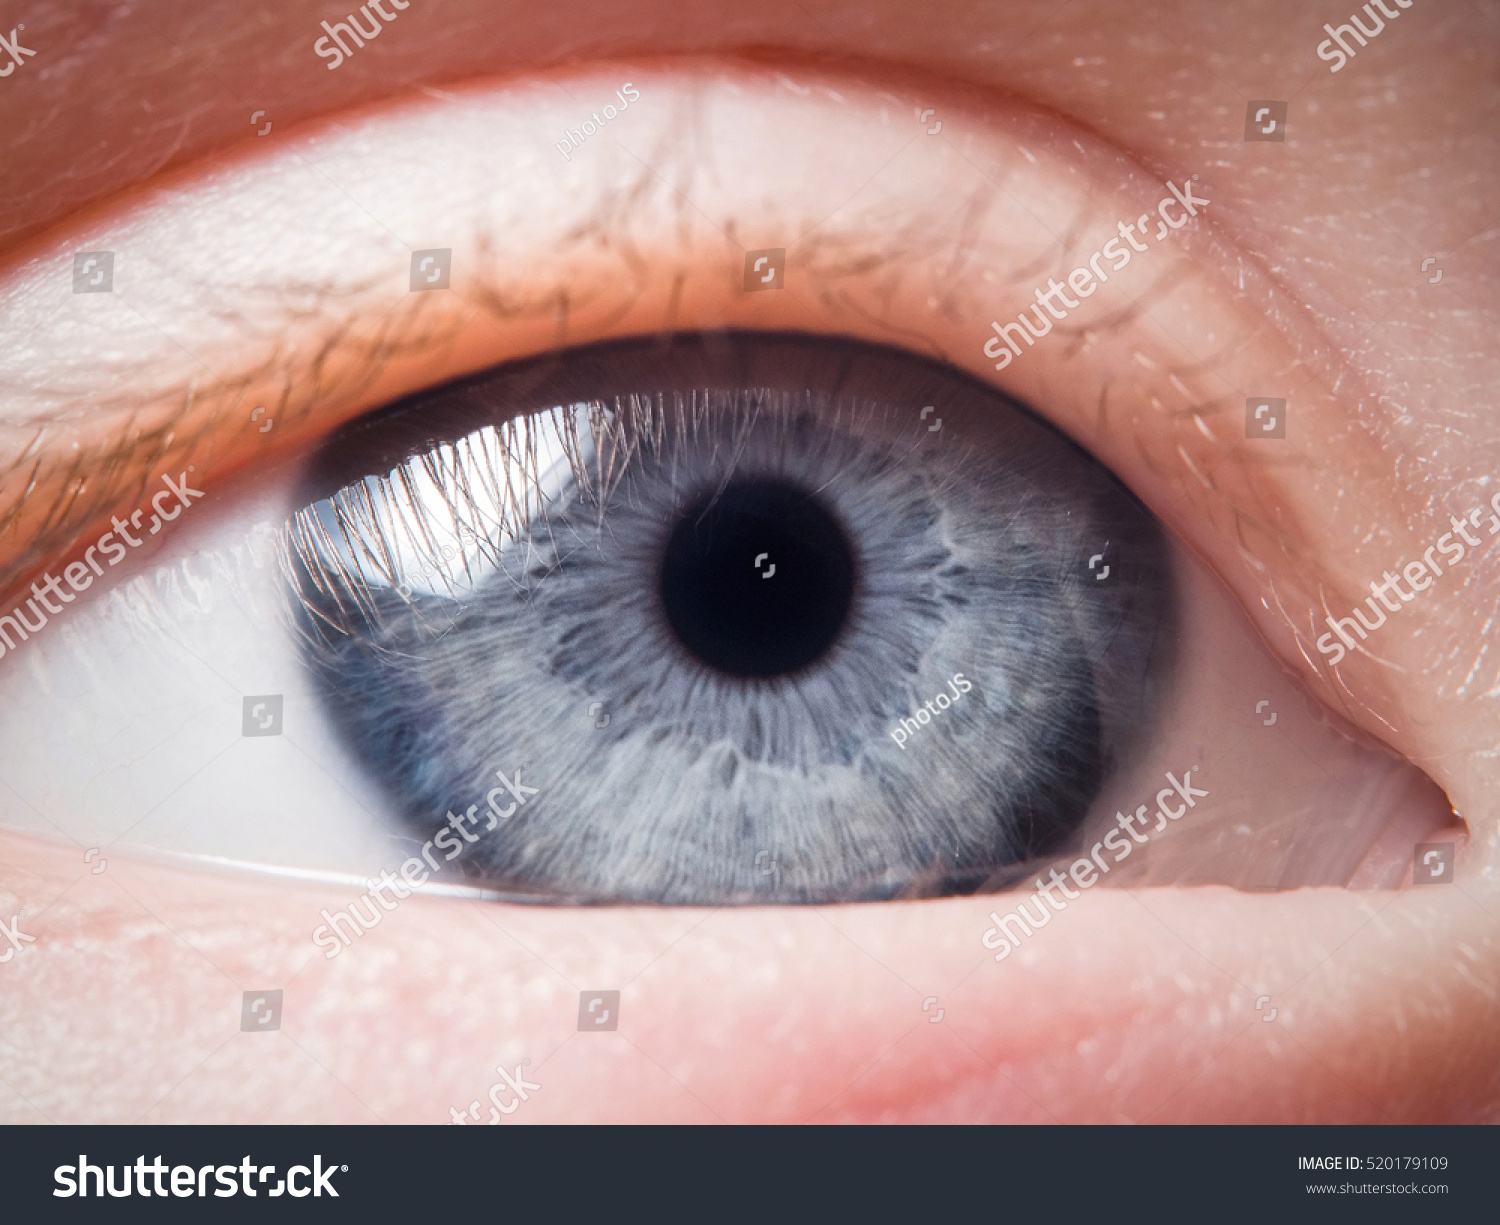 Human eye close-up #520179109